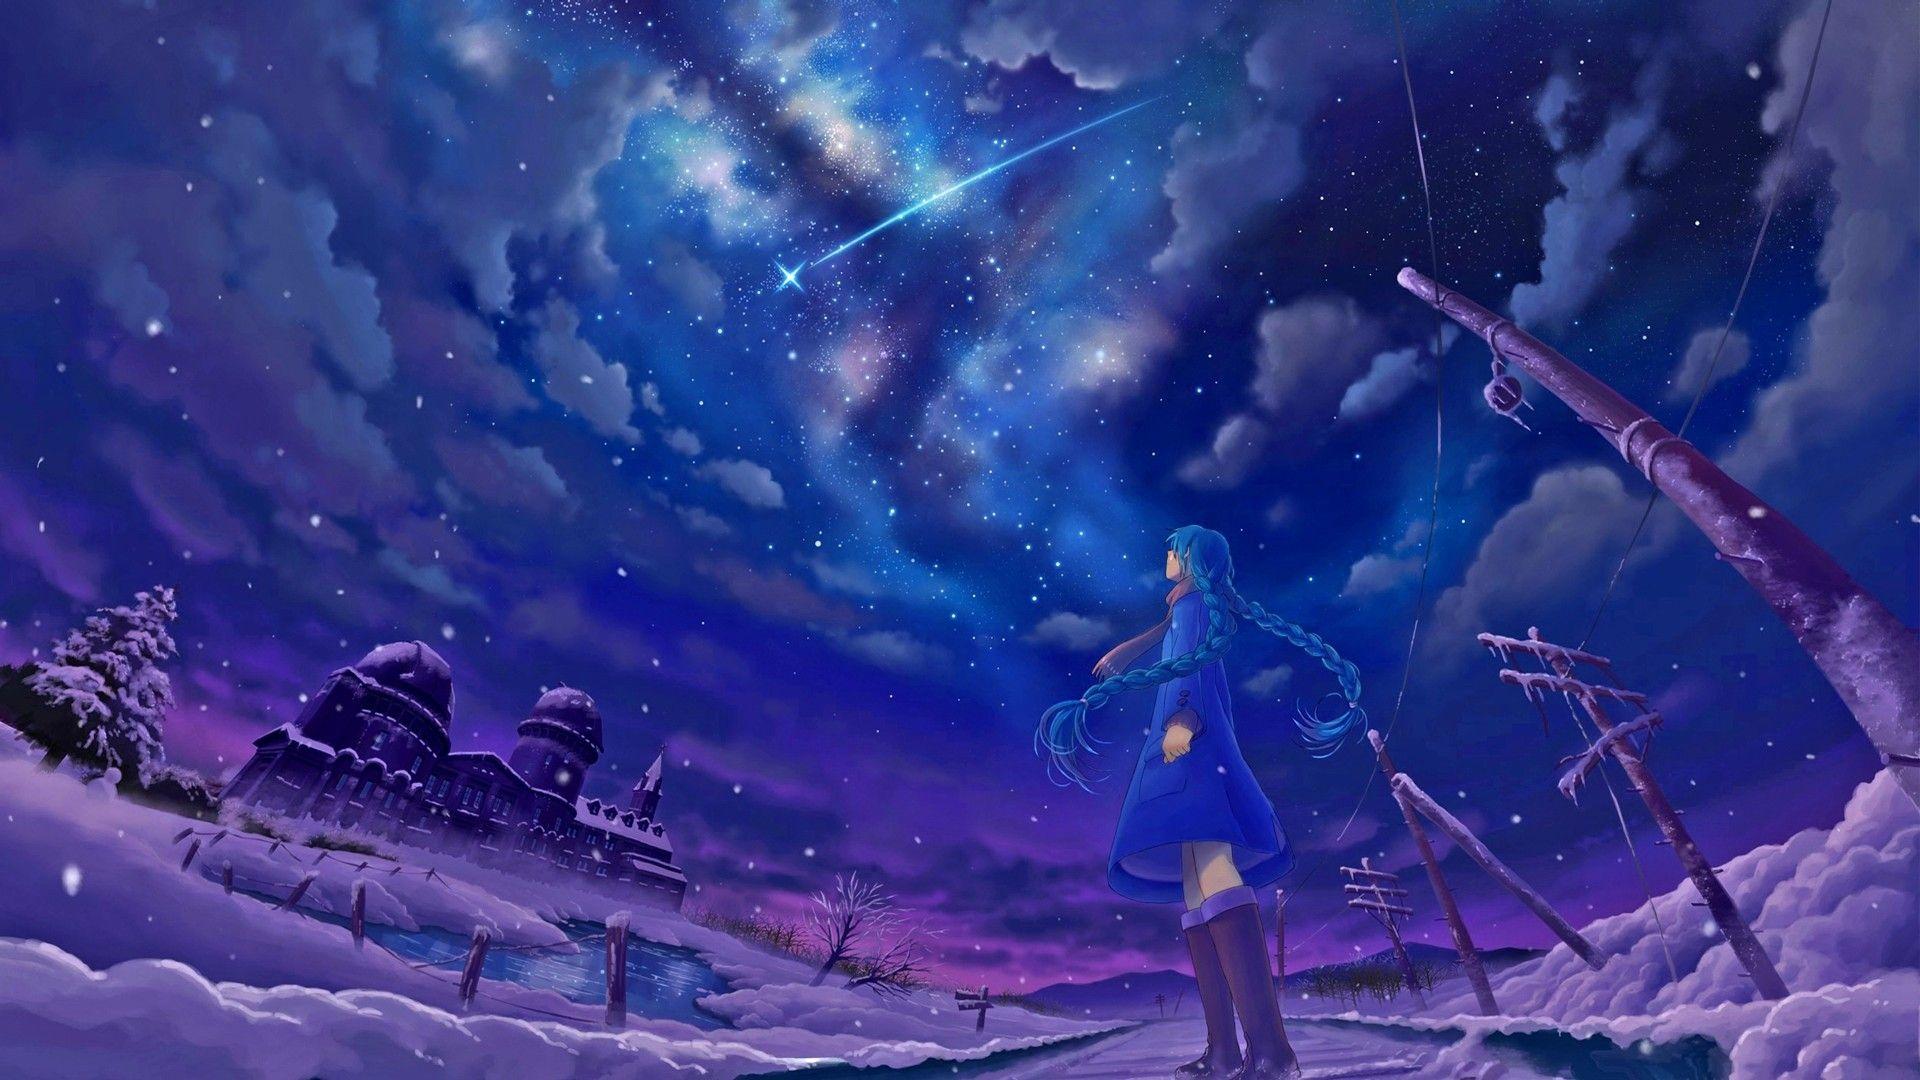 Anime fantasy magic girl 4K wallpaper download